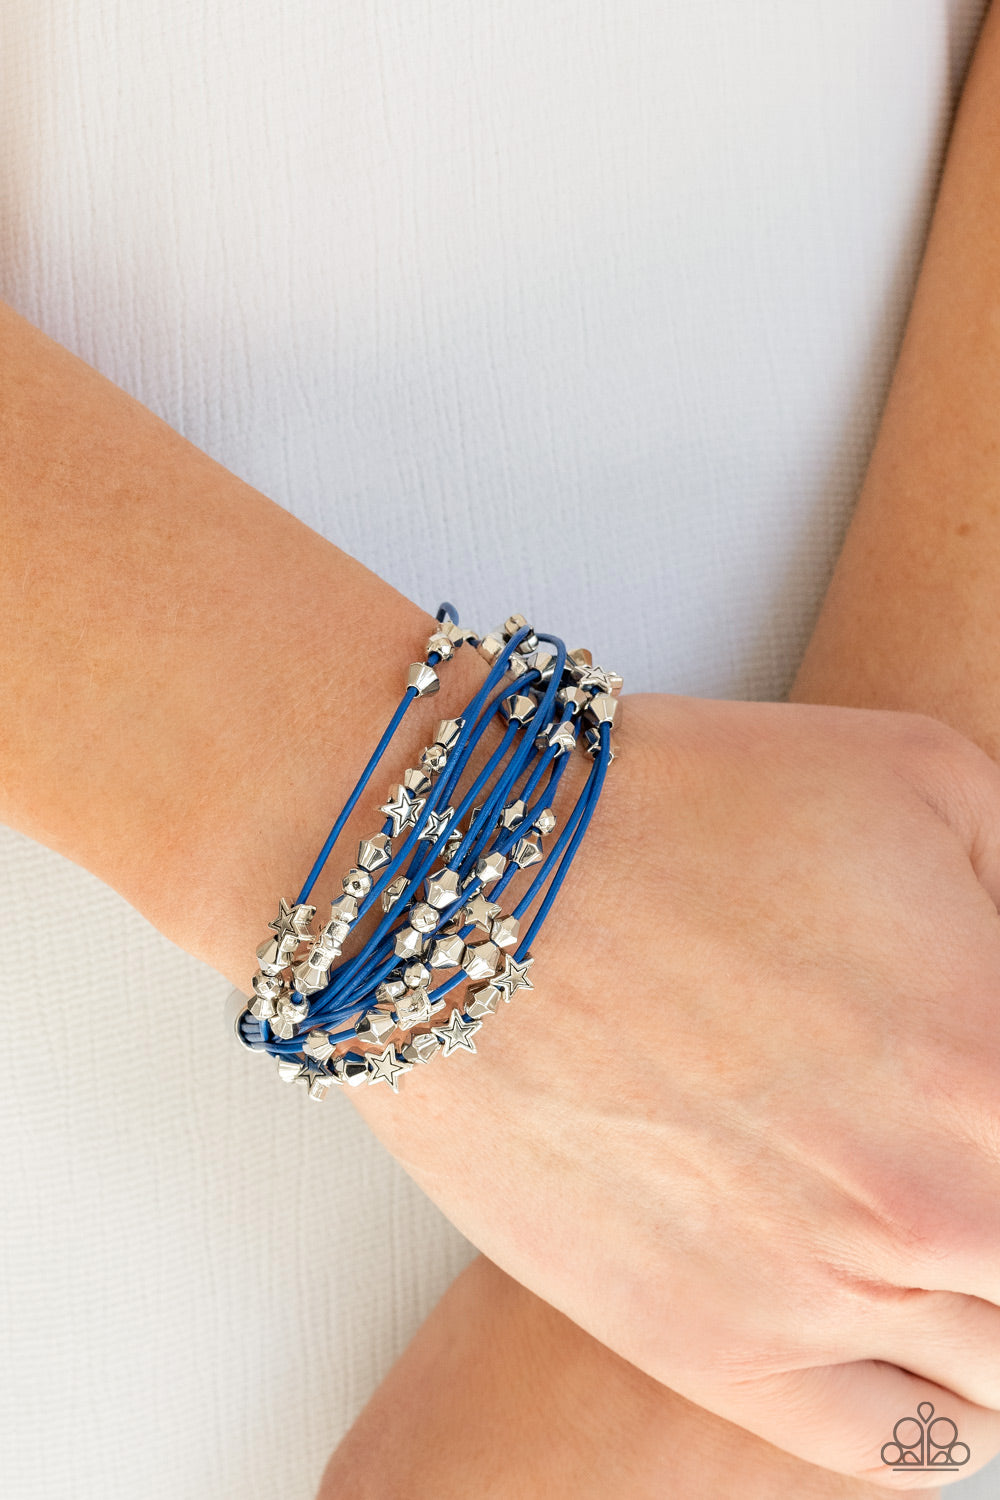 Paparazzi Star-Studded Affair - Blue Bracelet with magnetic closure $5 Jewelry. #P9WH-BLXX-239XX